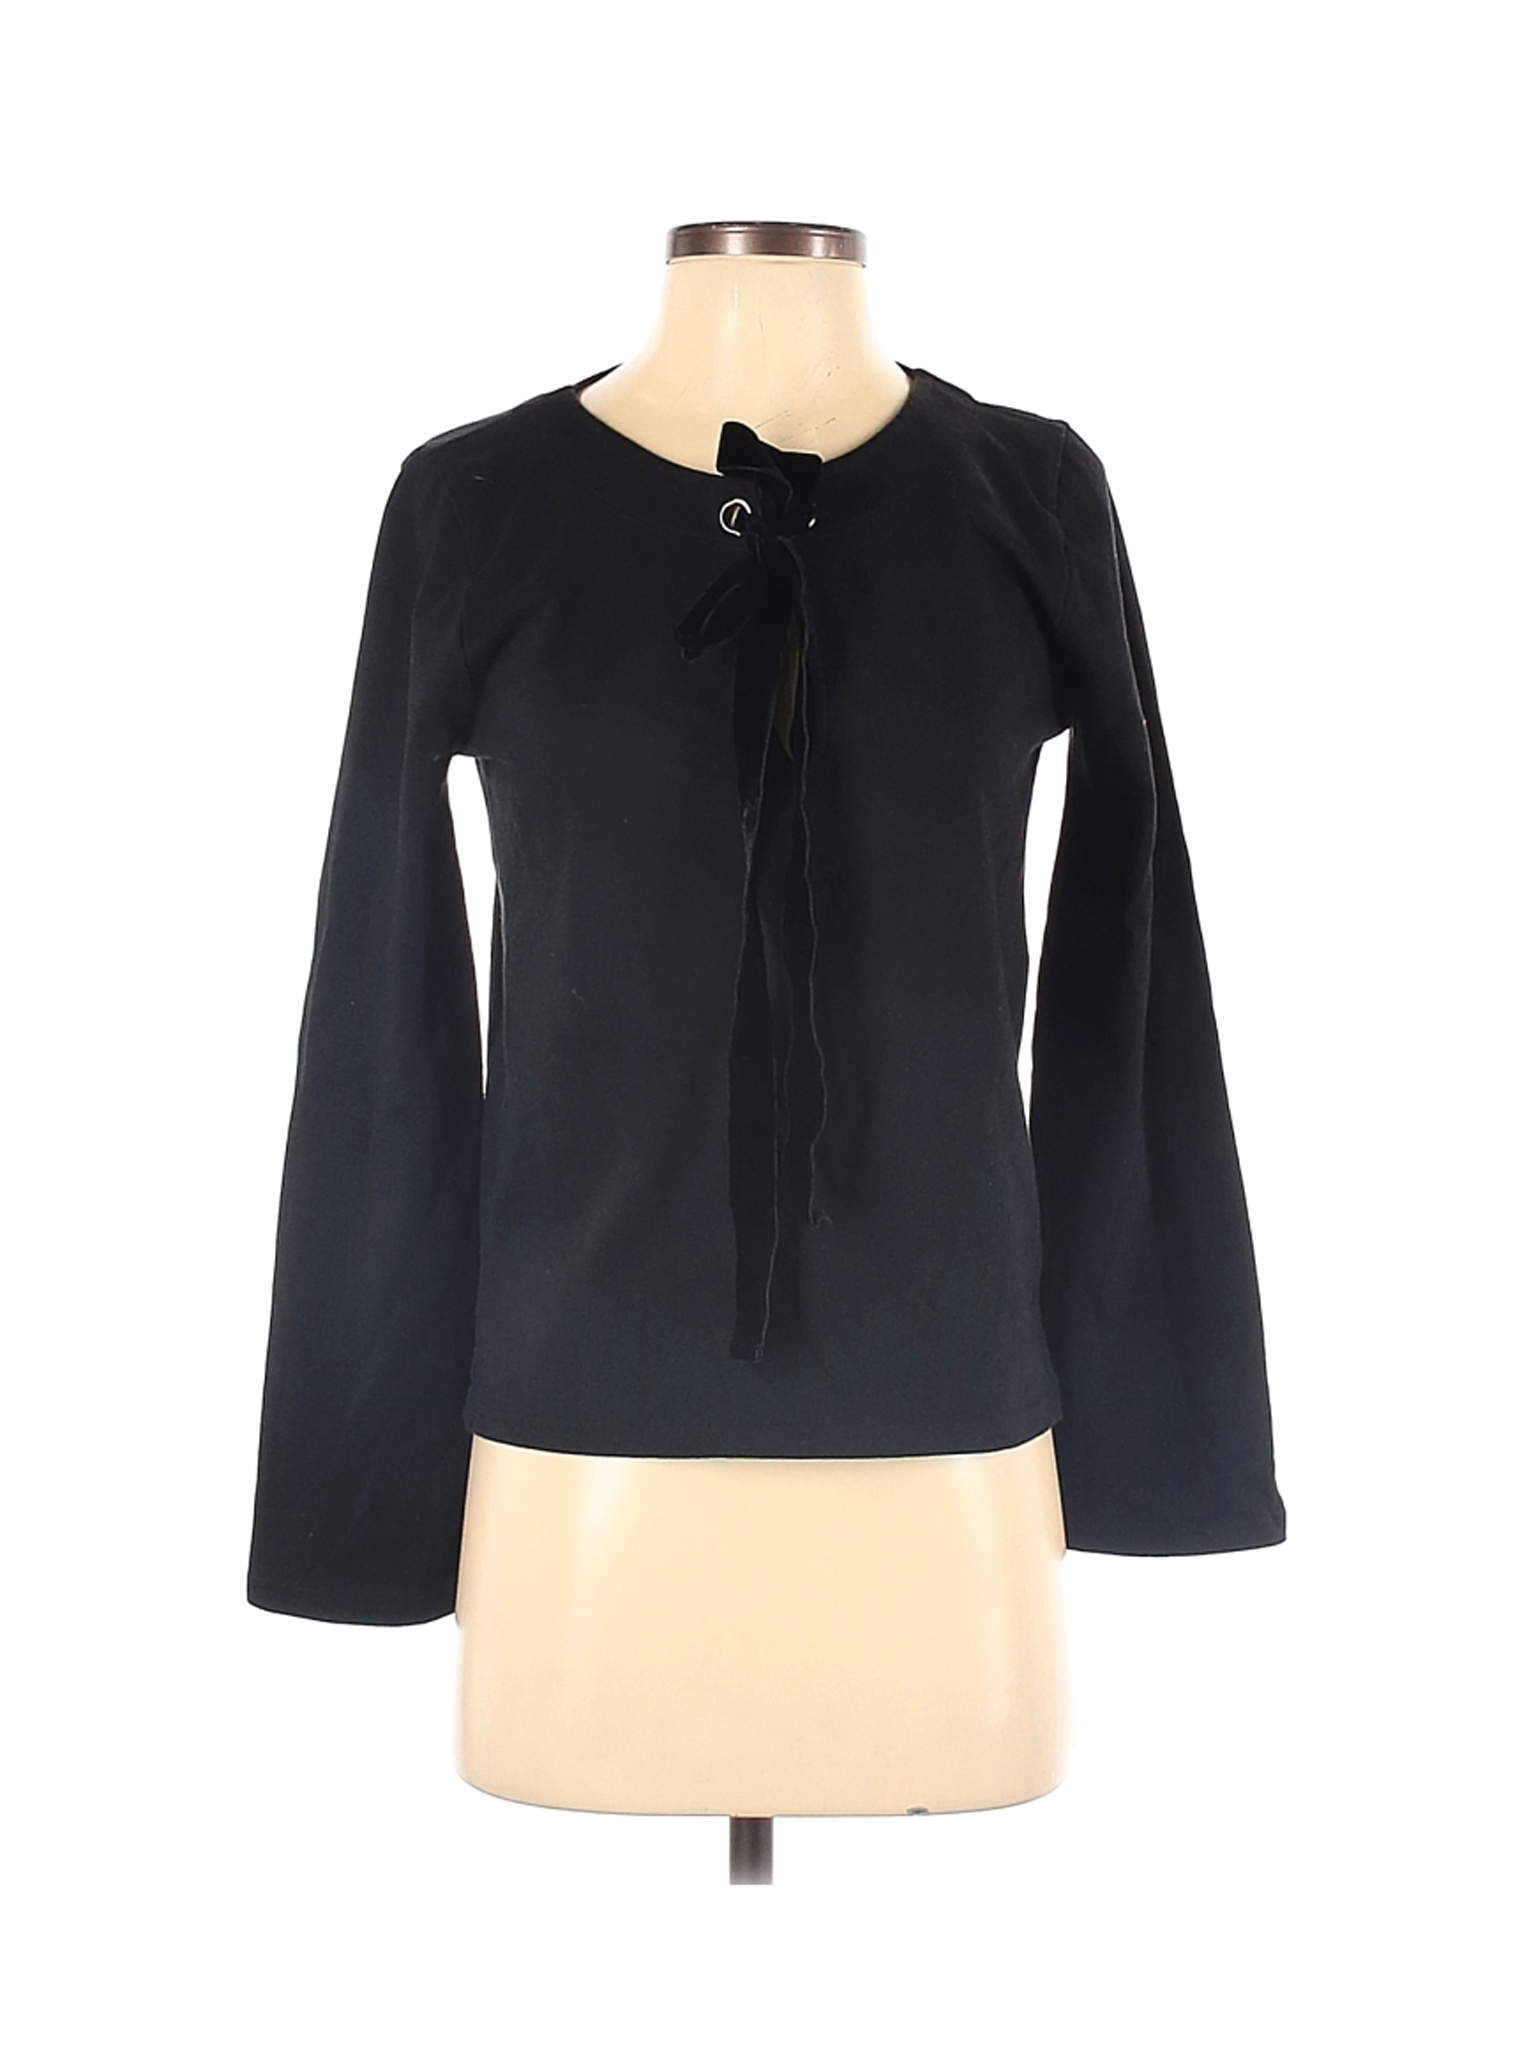 J.Crew Women Black Long Sleeve Top S | eBay